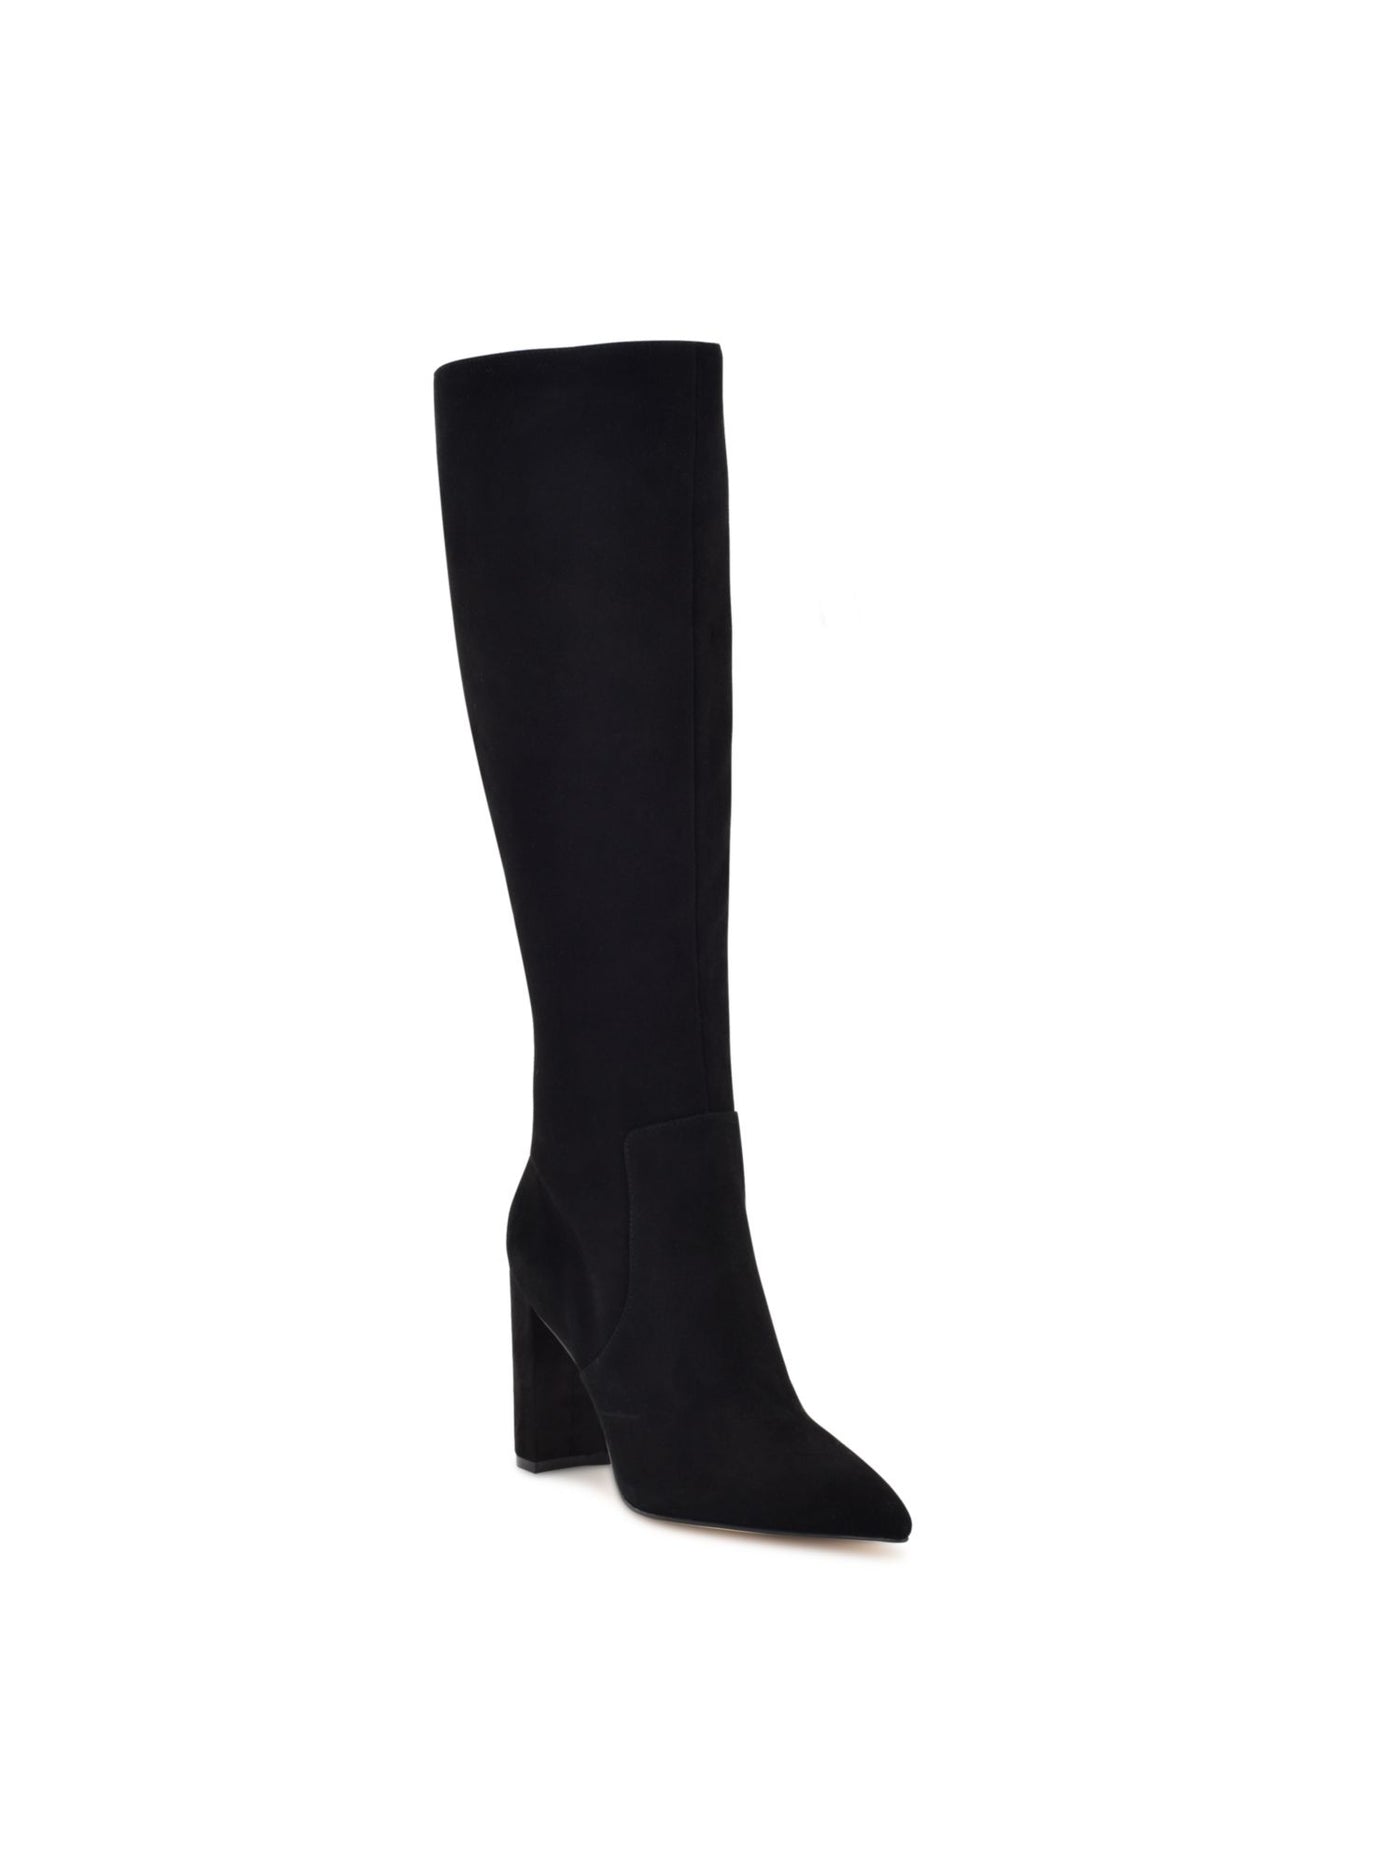 NINE WEST Womens Black Comfort Danee Pointed Toe Block Heel Zip-Up Leather Dress Boots 8.5 M